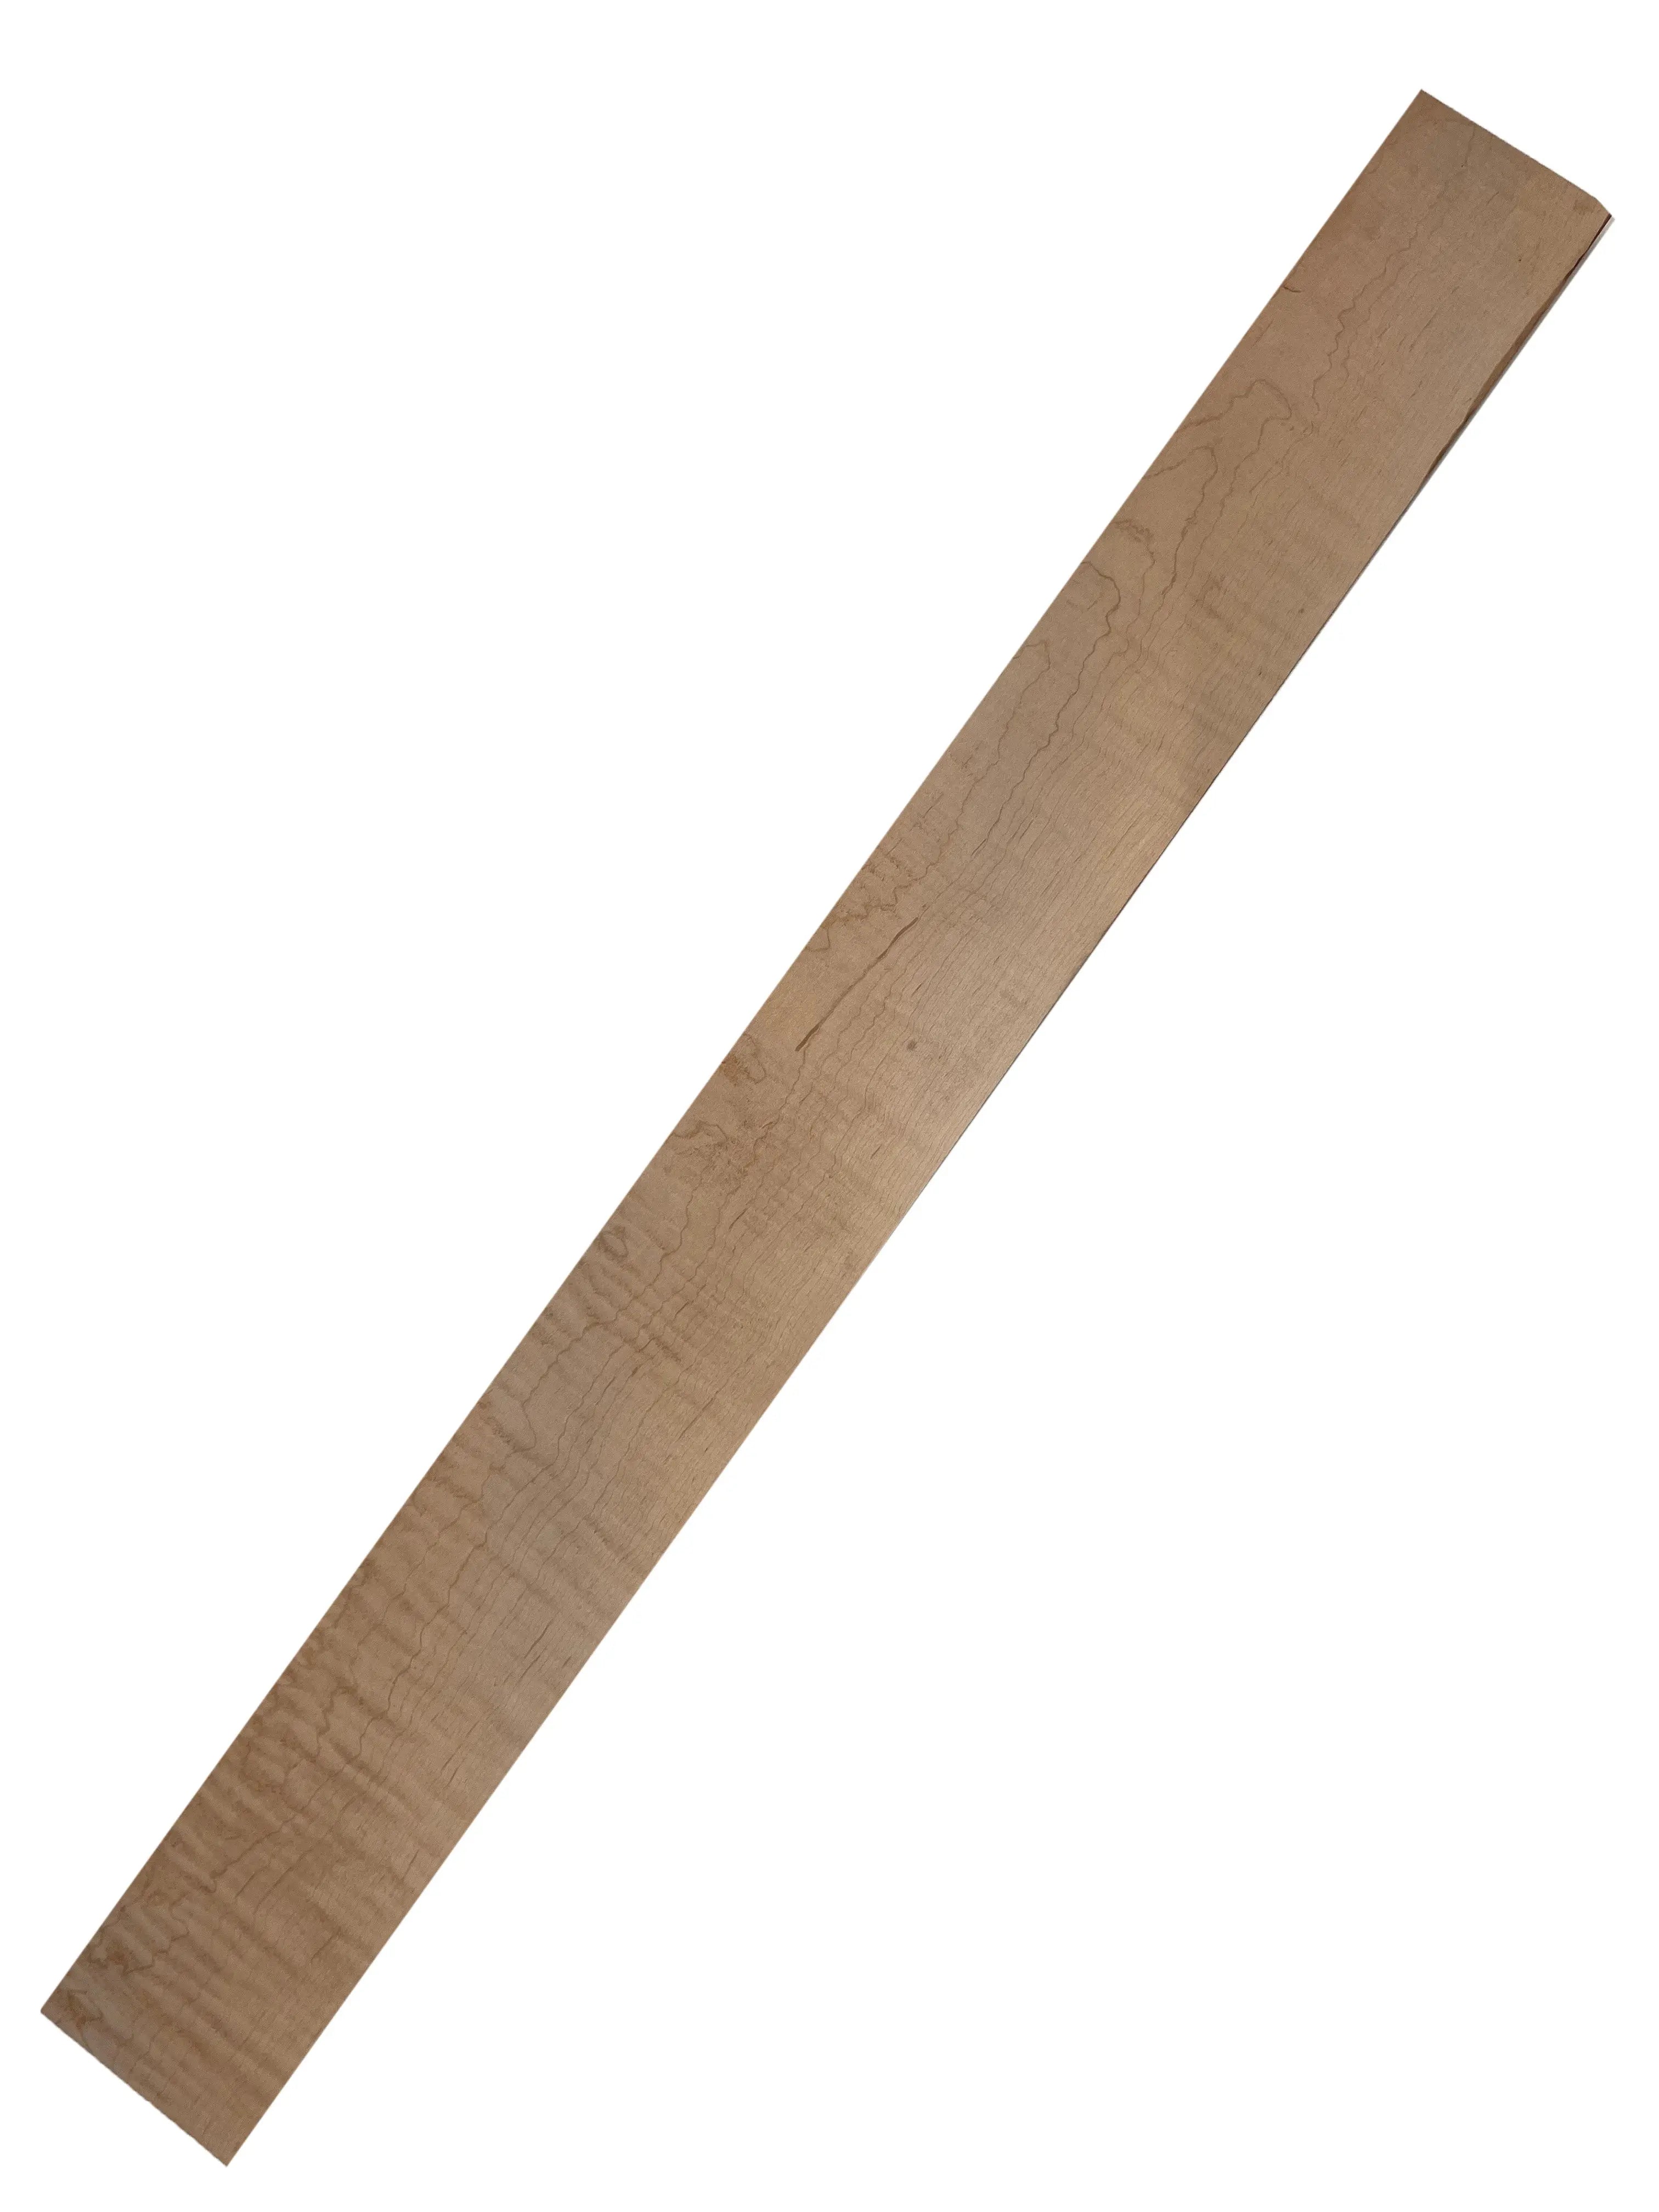 Plain Basswood Sheet, 0.25 thick, 4x12 inches long - BULK